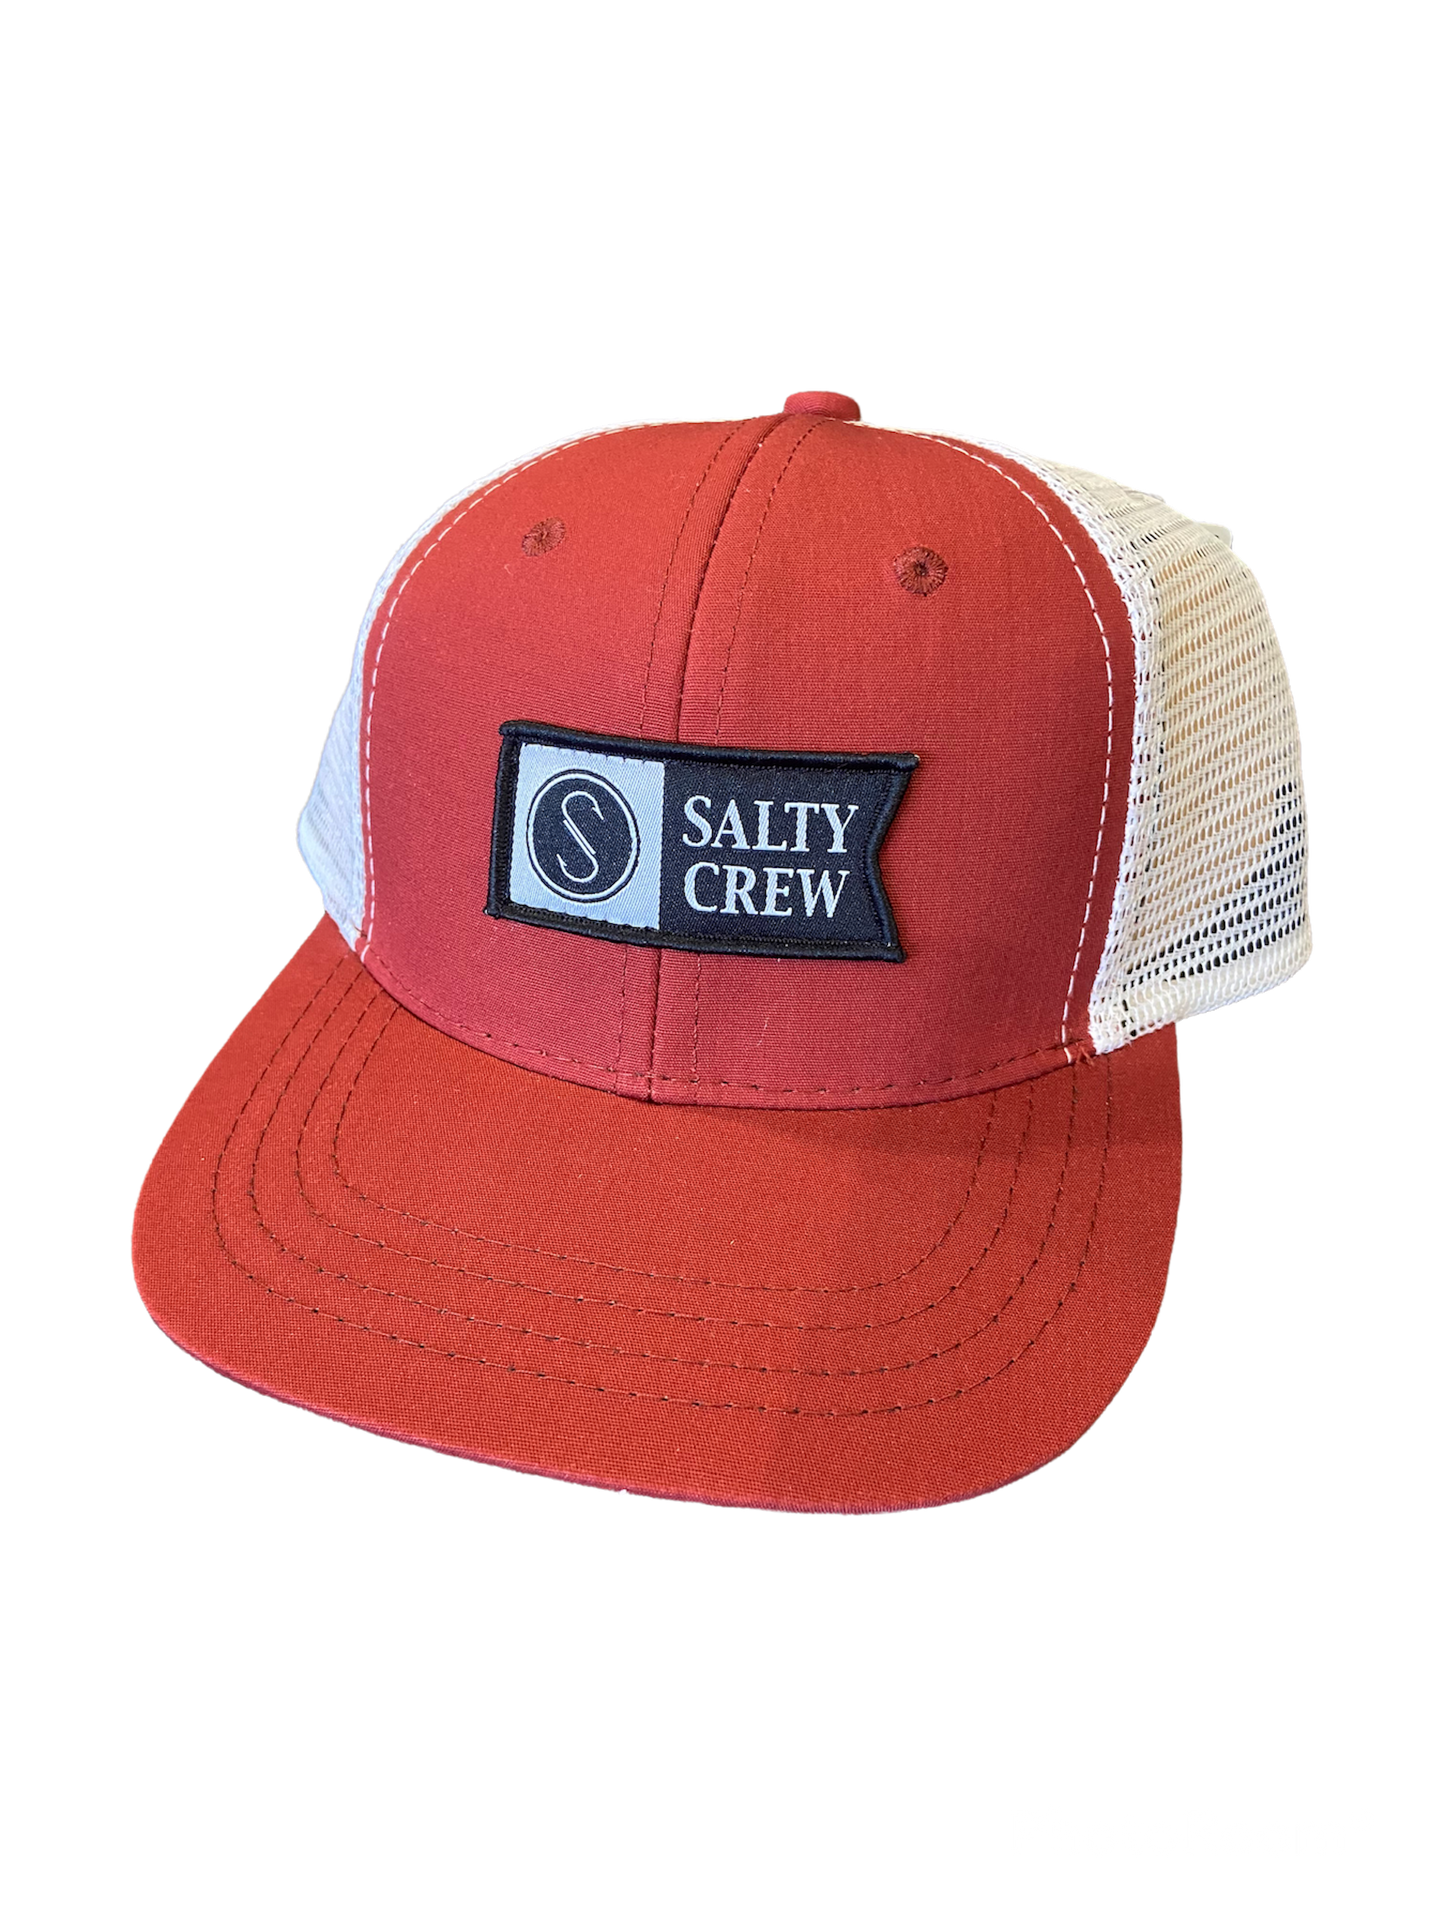 Salty Crew Pinnacle Boys Trucker Hat Hats Rust White